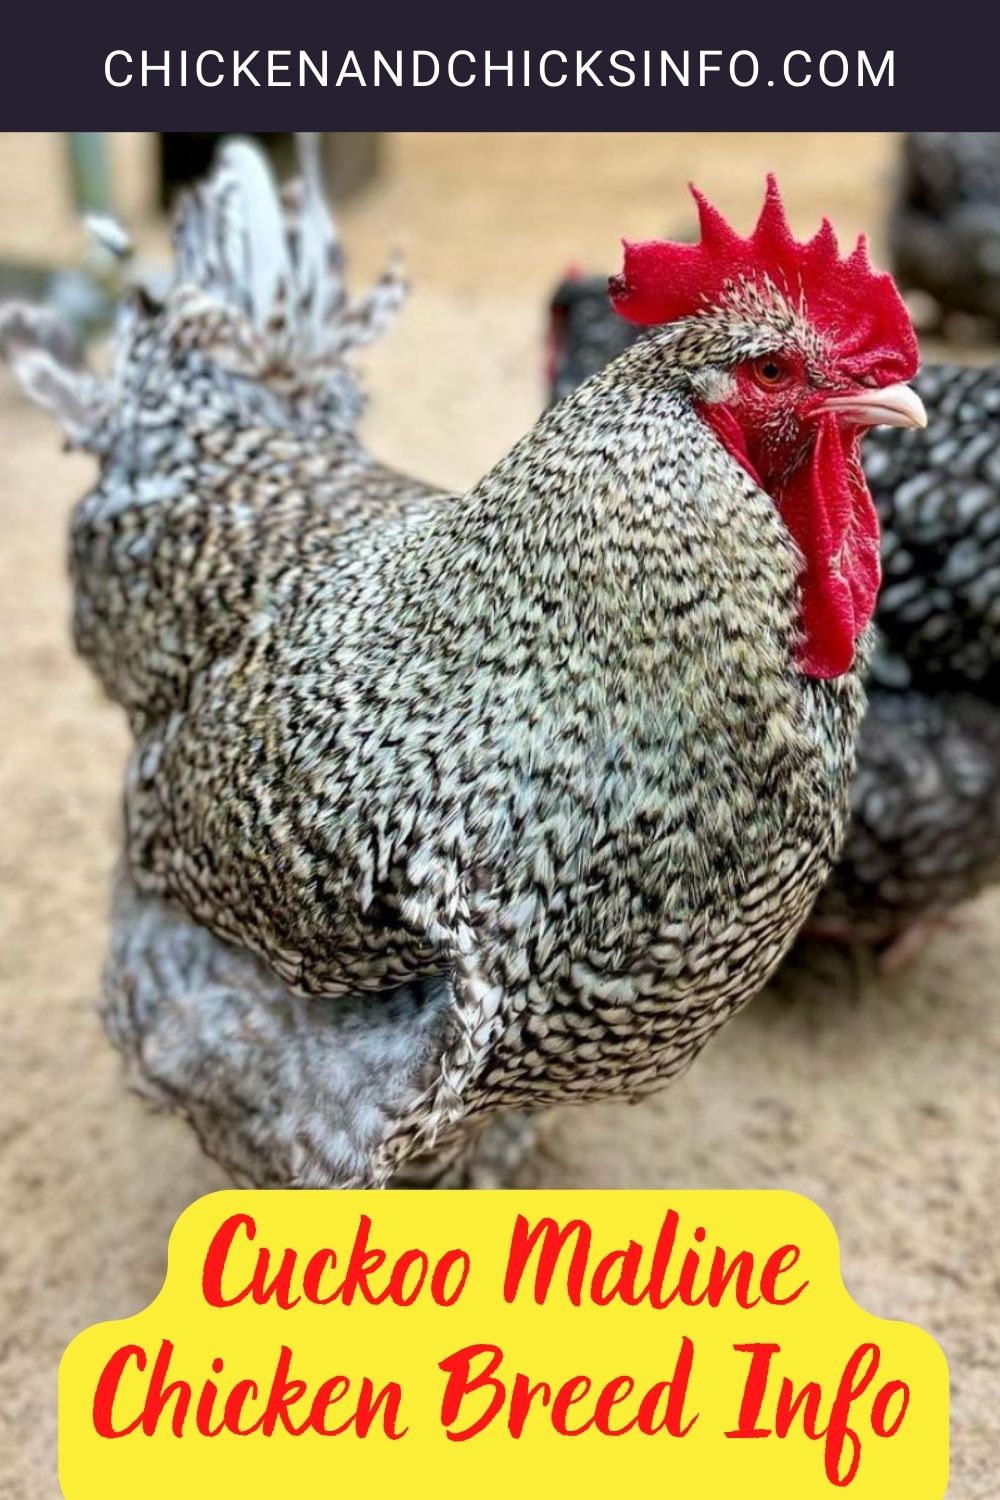 Cuckoo Maline Chicken Breed Info pinterest image.